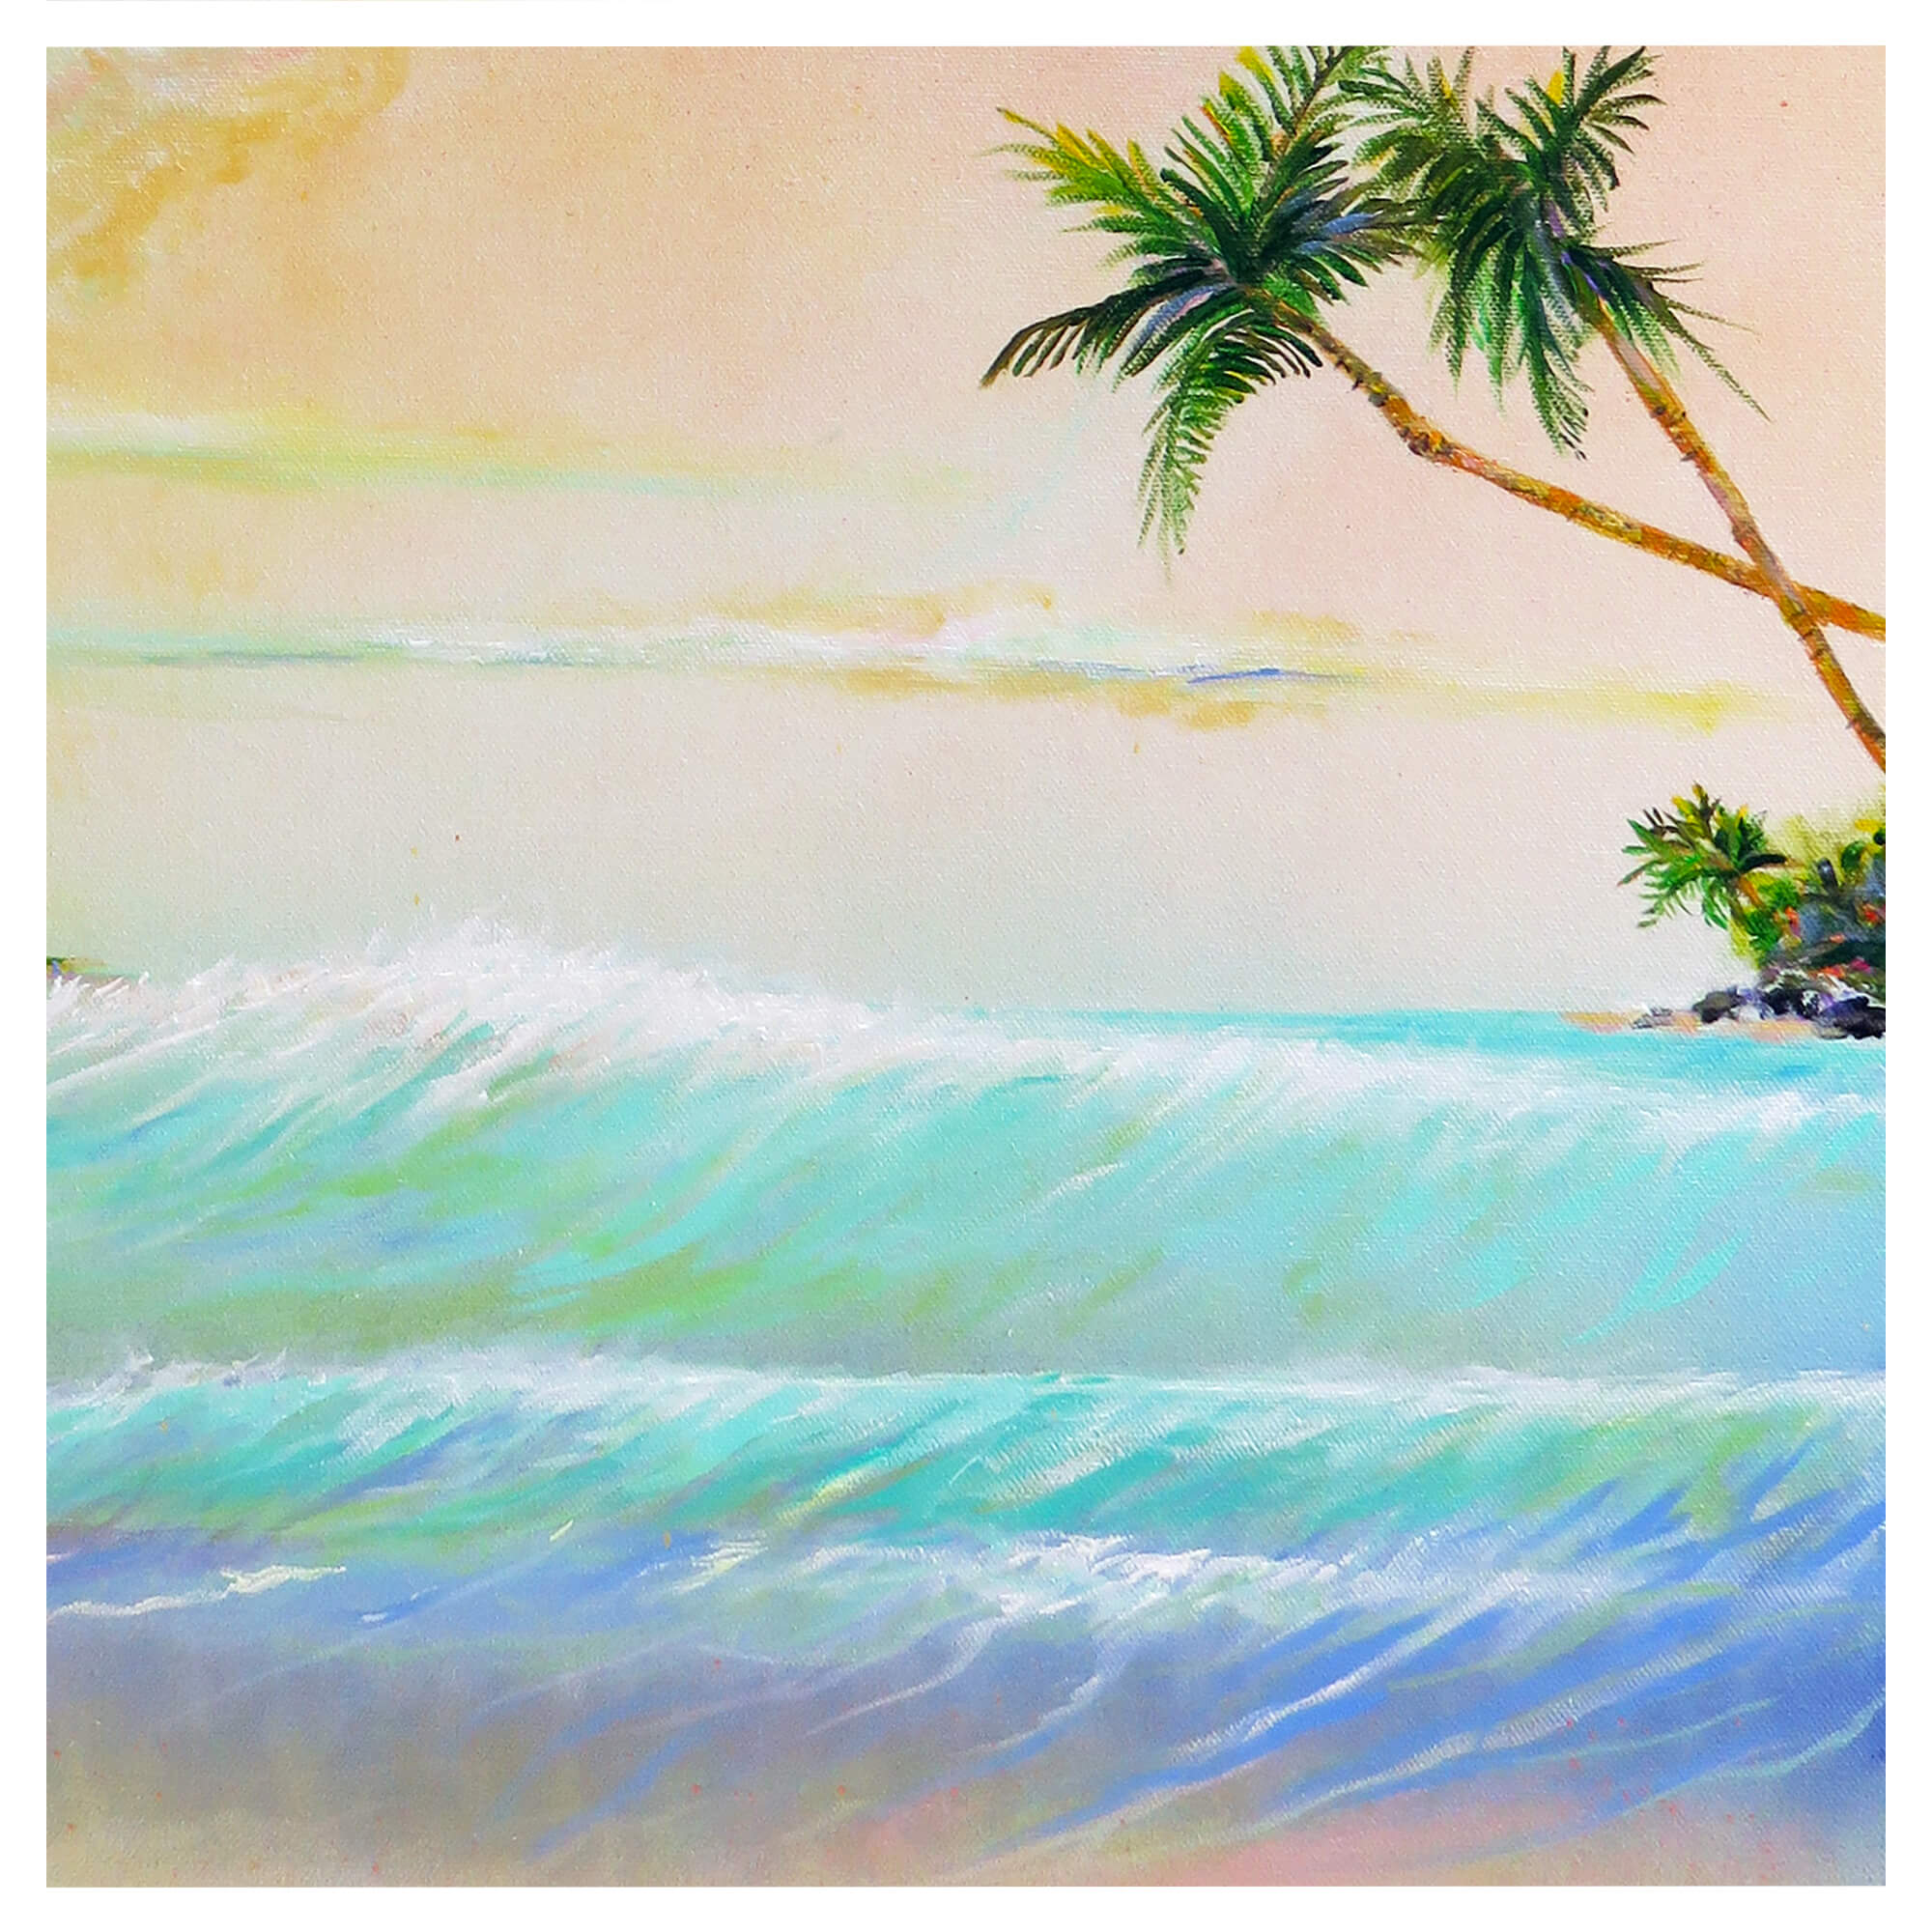 Coconut trees and teal-hued ocean water by Hawaii artist Jess Burda